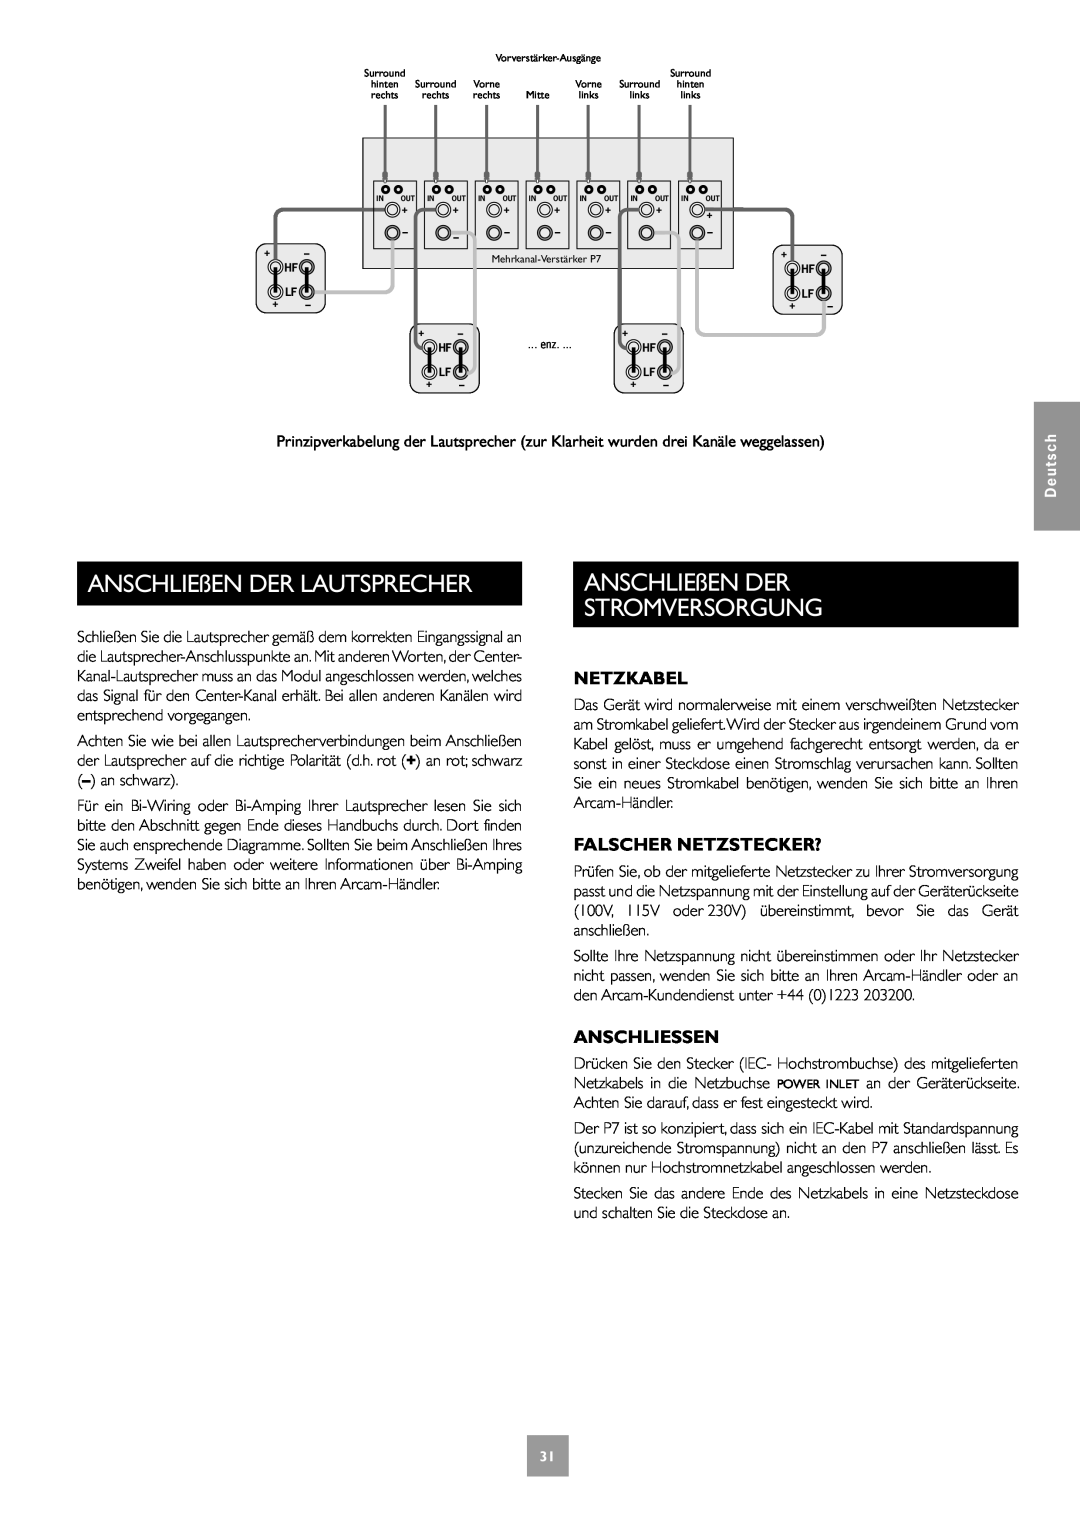 Arcam Multichannel Power Amplifier manual ANSCHLIEßEN DER STROMVERSORGUNG, Netzkabel, Falscher Netzstecker?, Anschliessen 